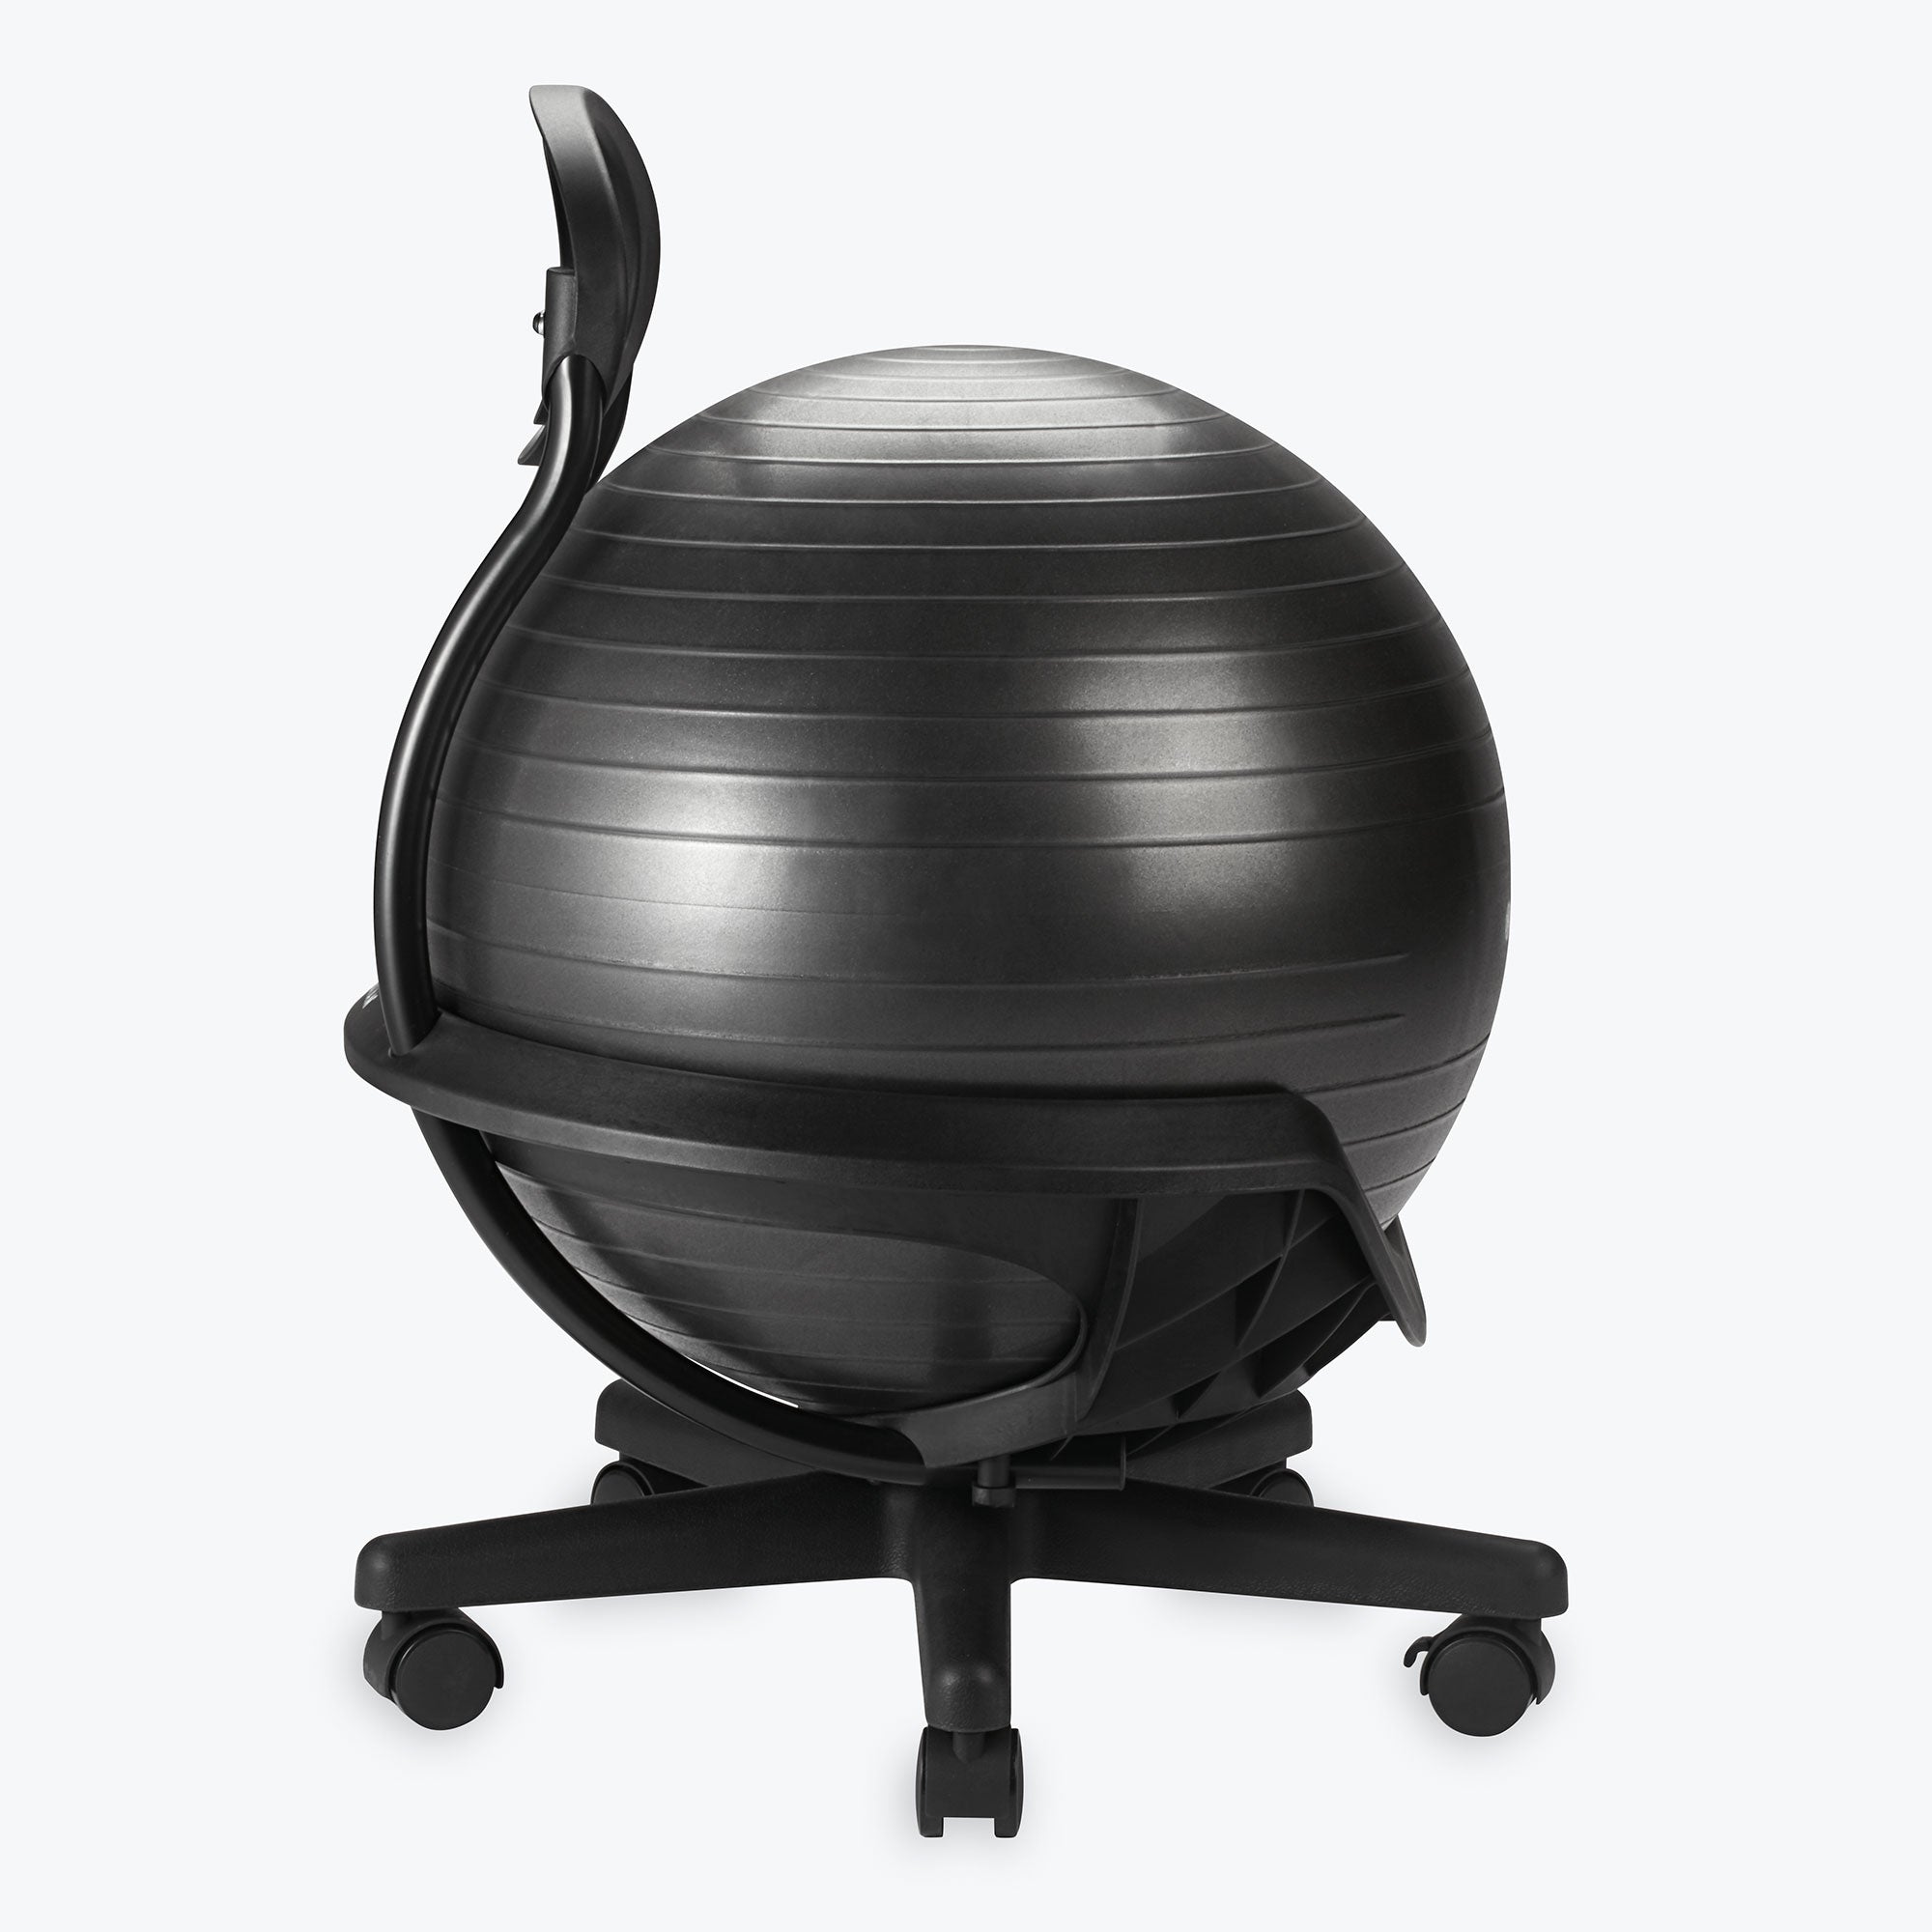 Gaiam Ultimate Balance Ball Chair - Ergonomic Ball Chair